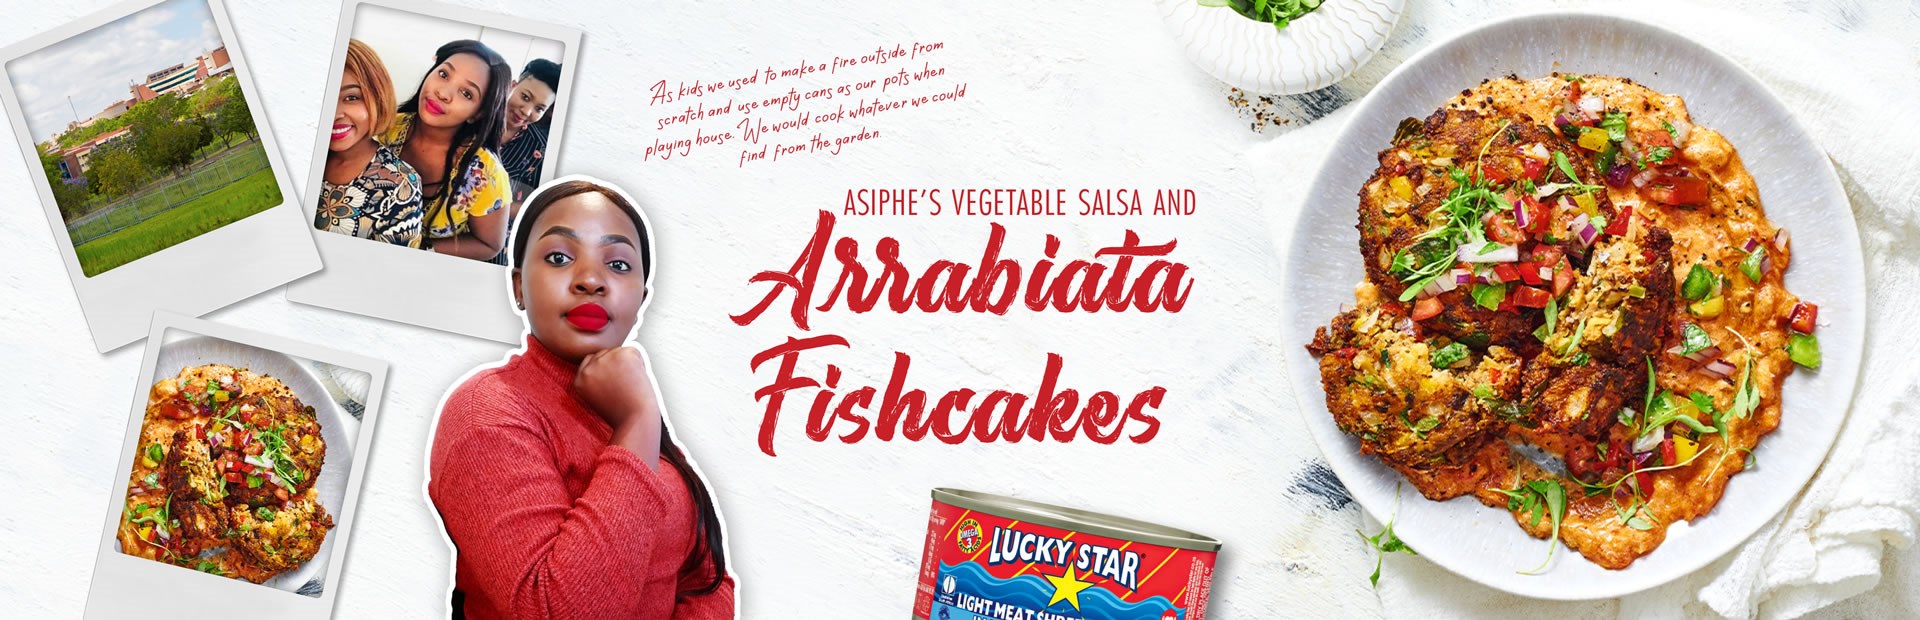 ASIPHE’S VEGETABLE SALSA AND Arrabiata Fishcakes